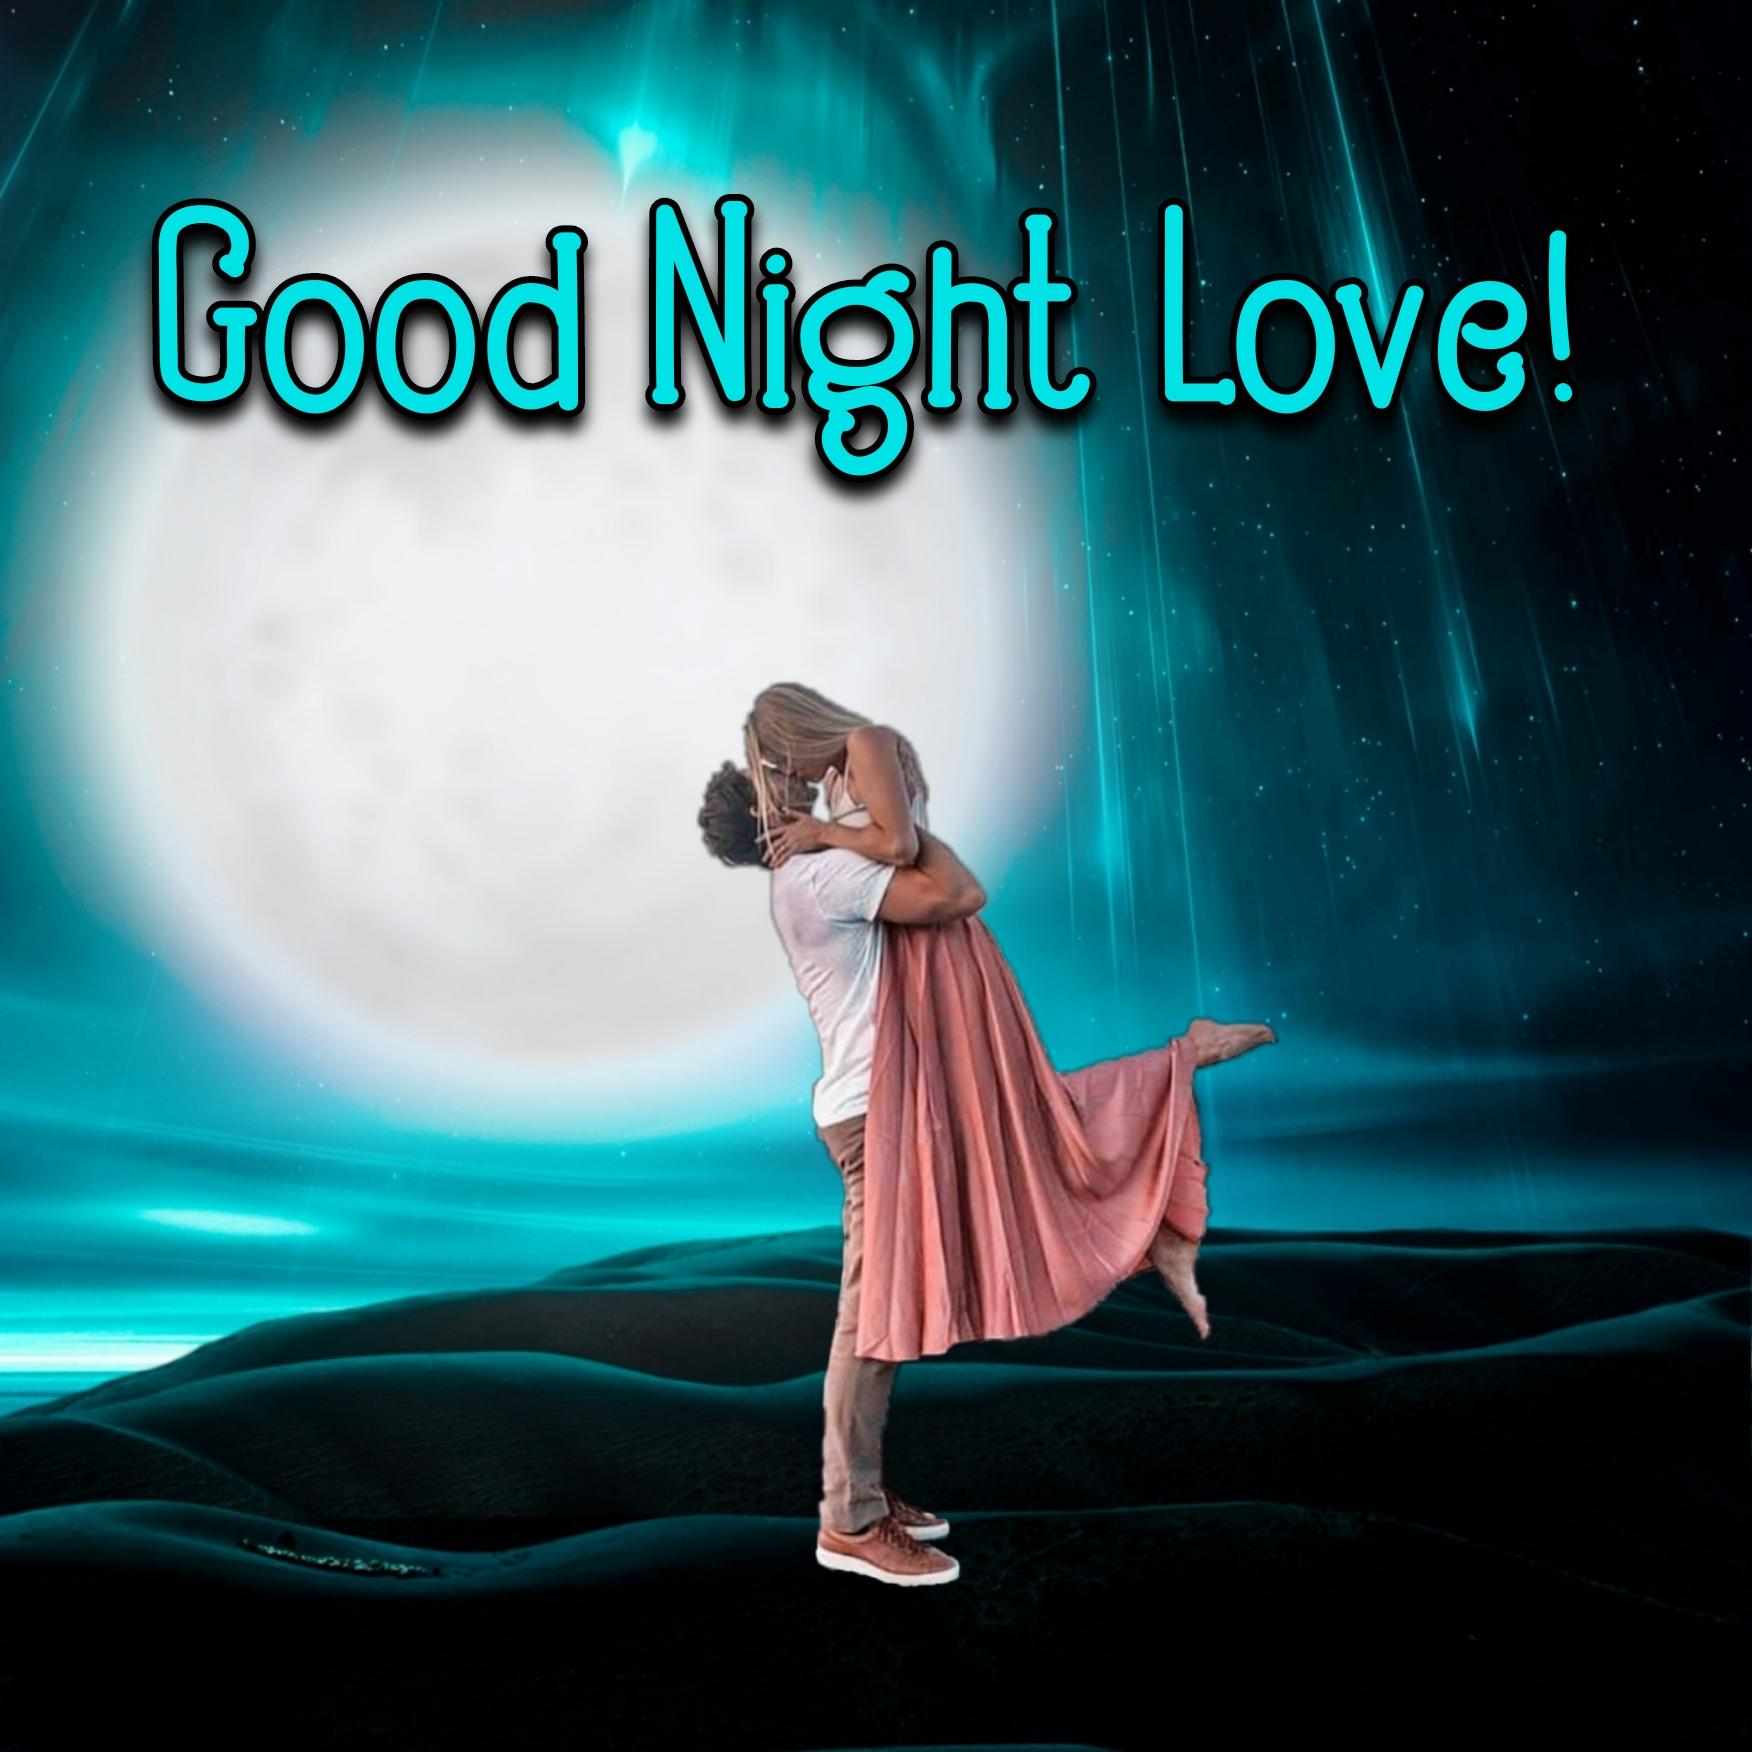 Romantic Good Night Hug Image